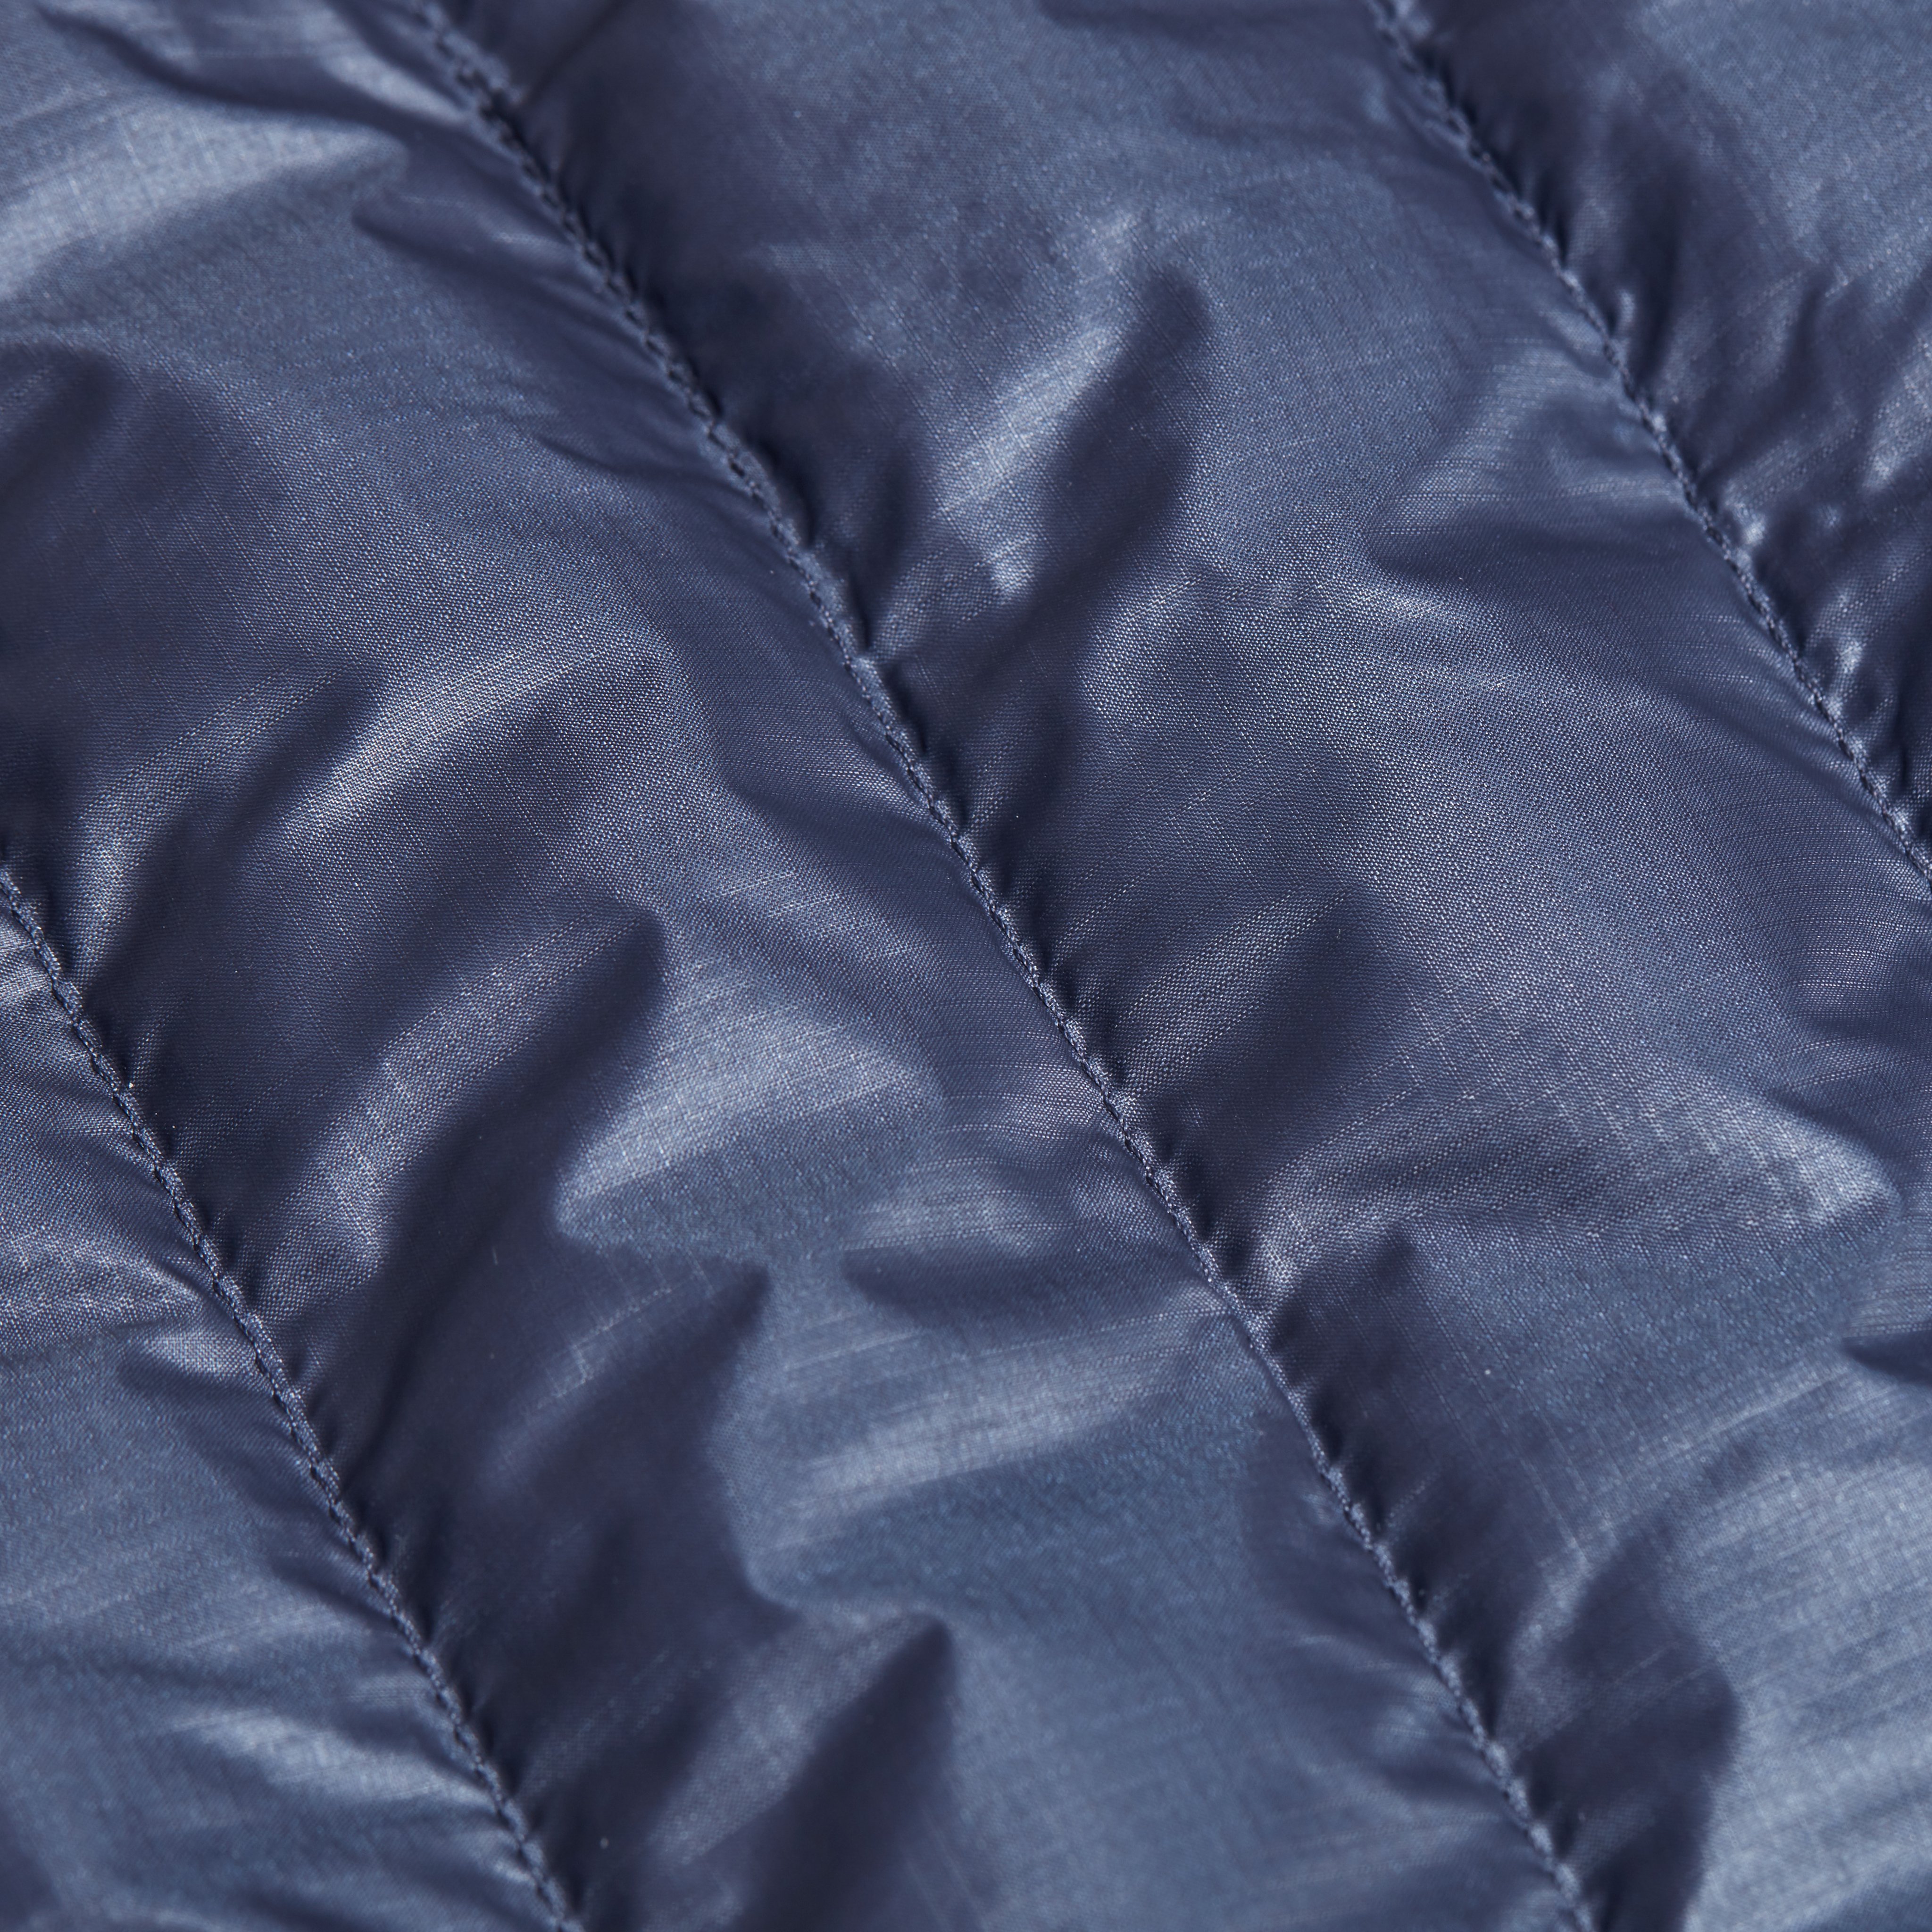 Albula IN Jacket Men product image